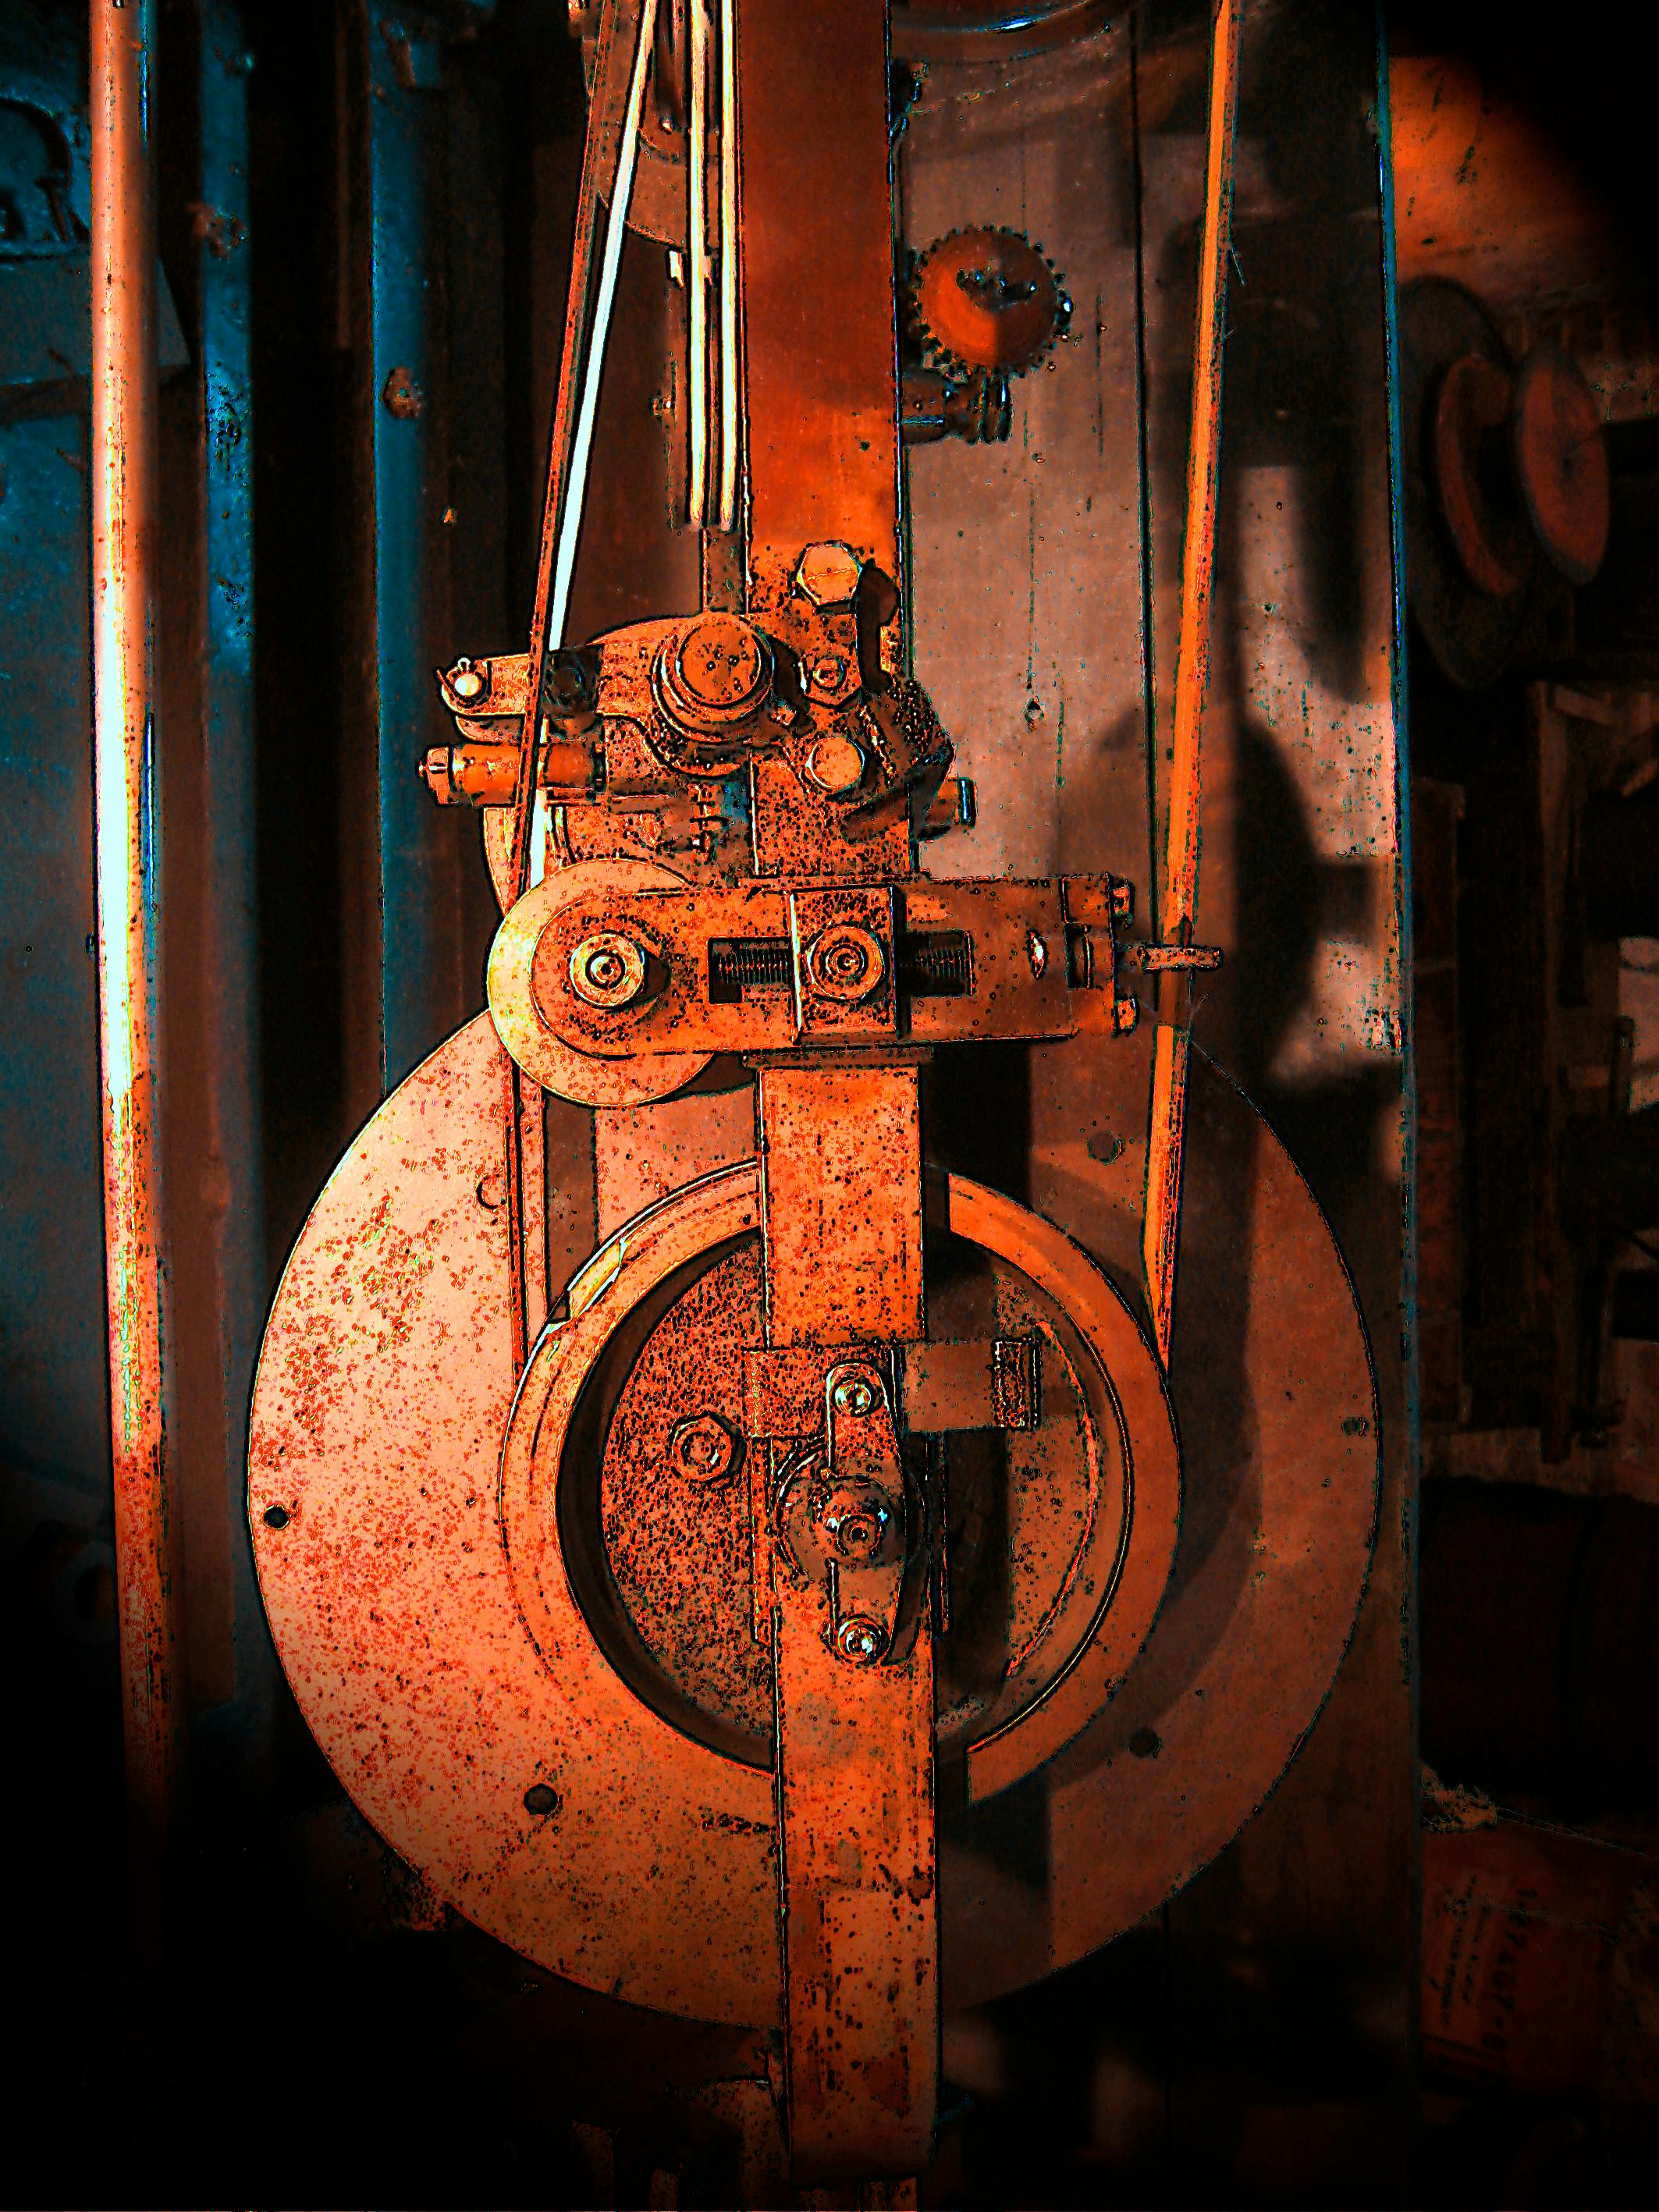 Free stock photo of industrial machinery, machine